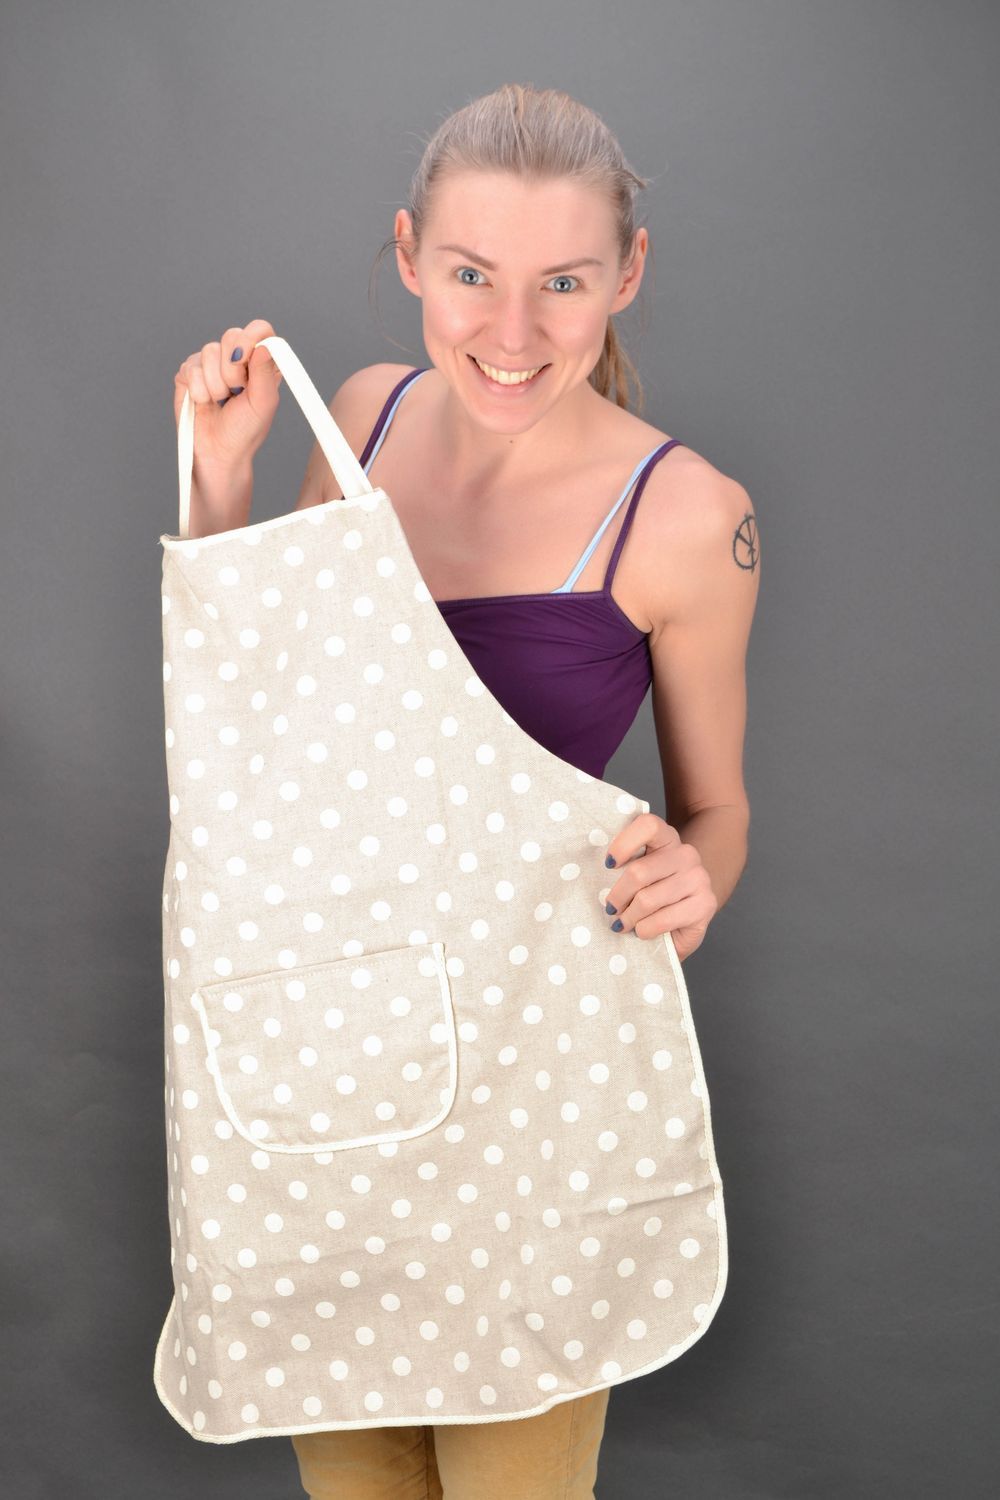 Polka dot fabric kitchen apron photo 2